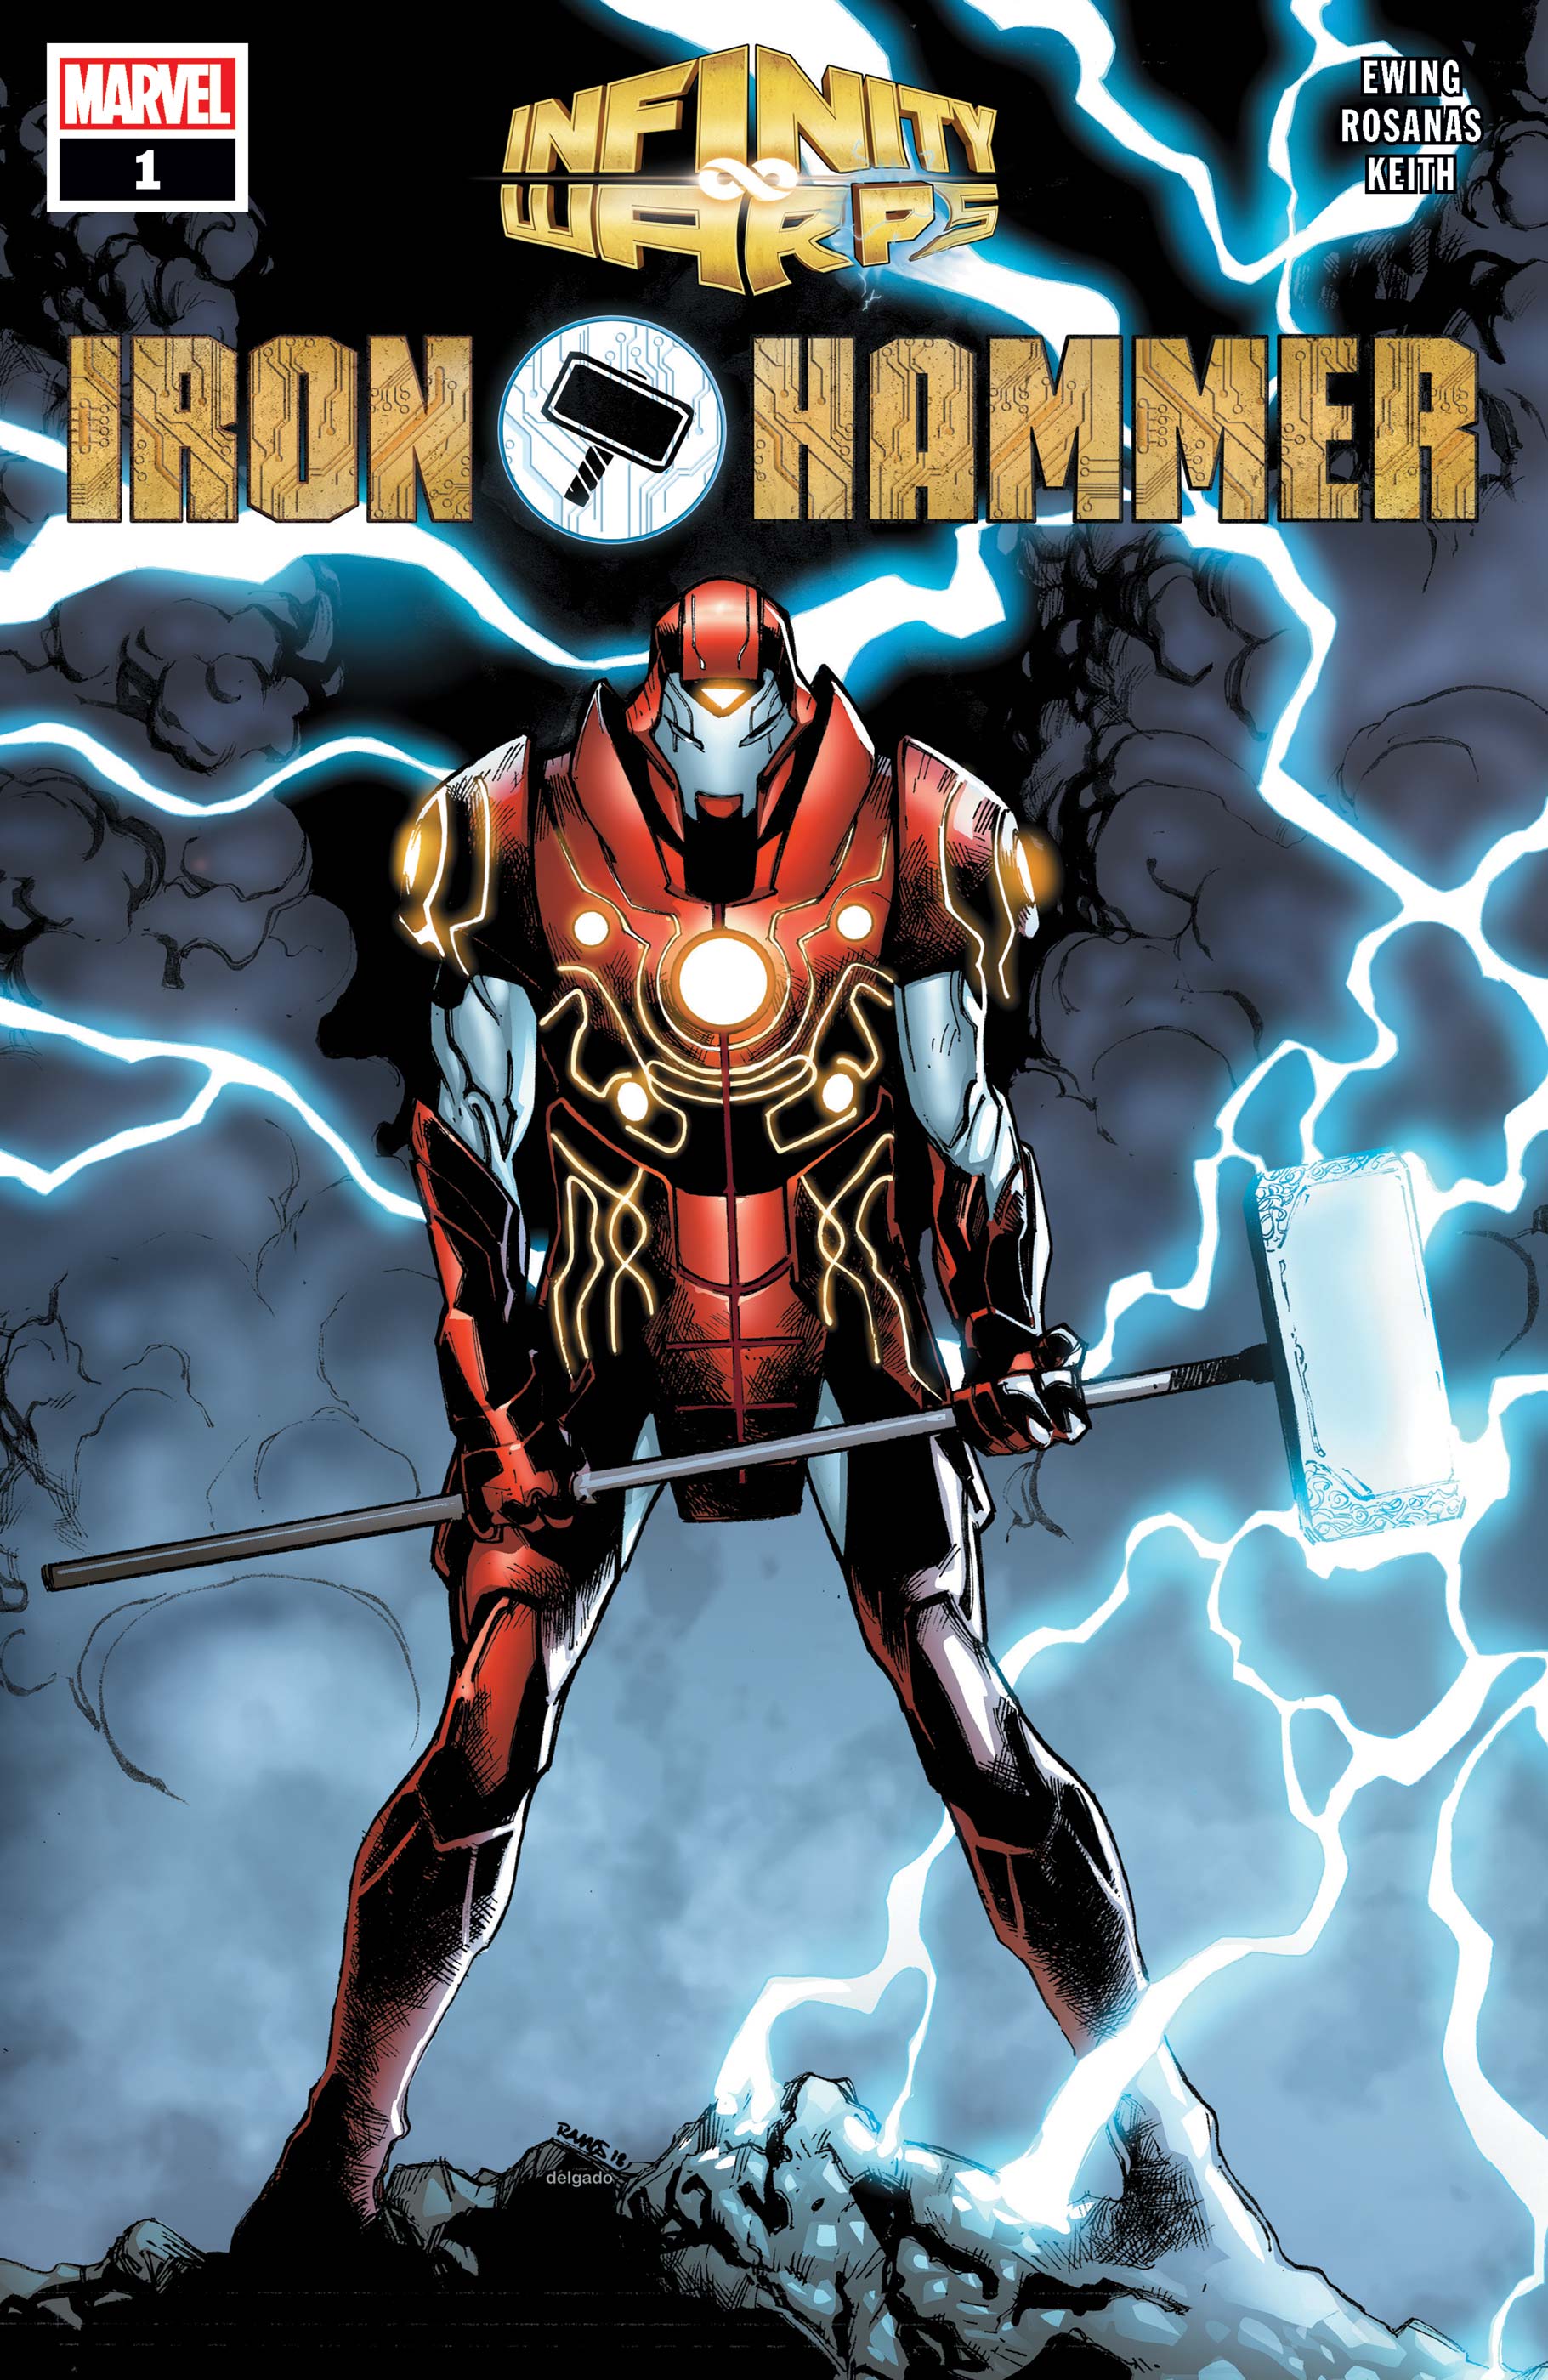 Infinity Wars: Iron Hammer (2018) #1